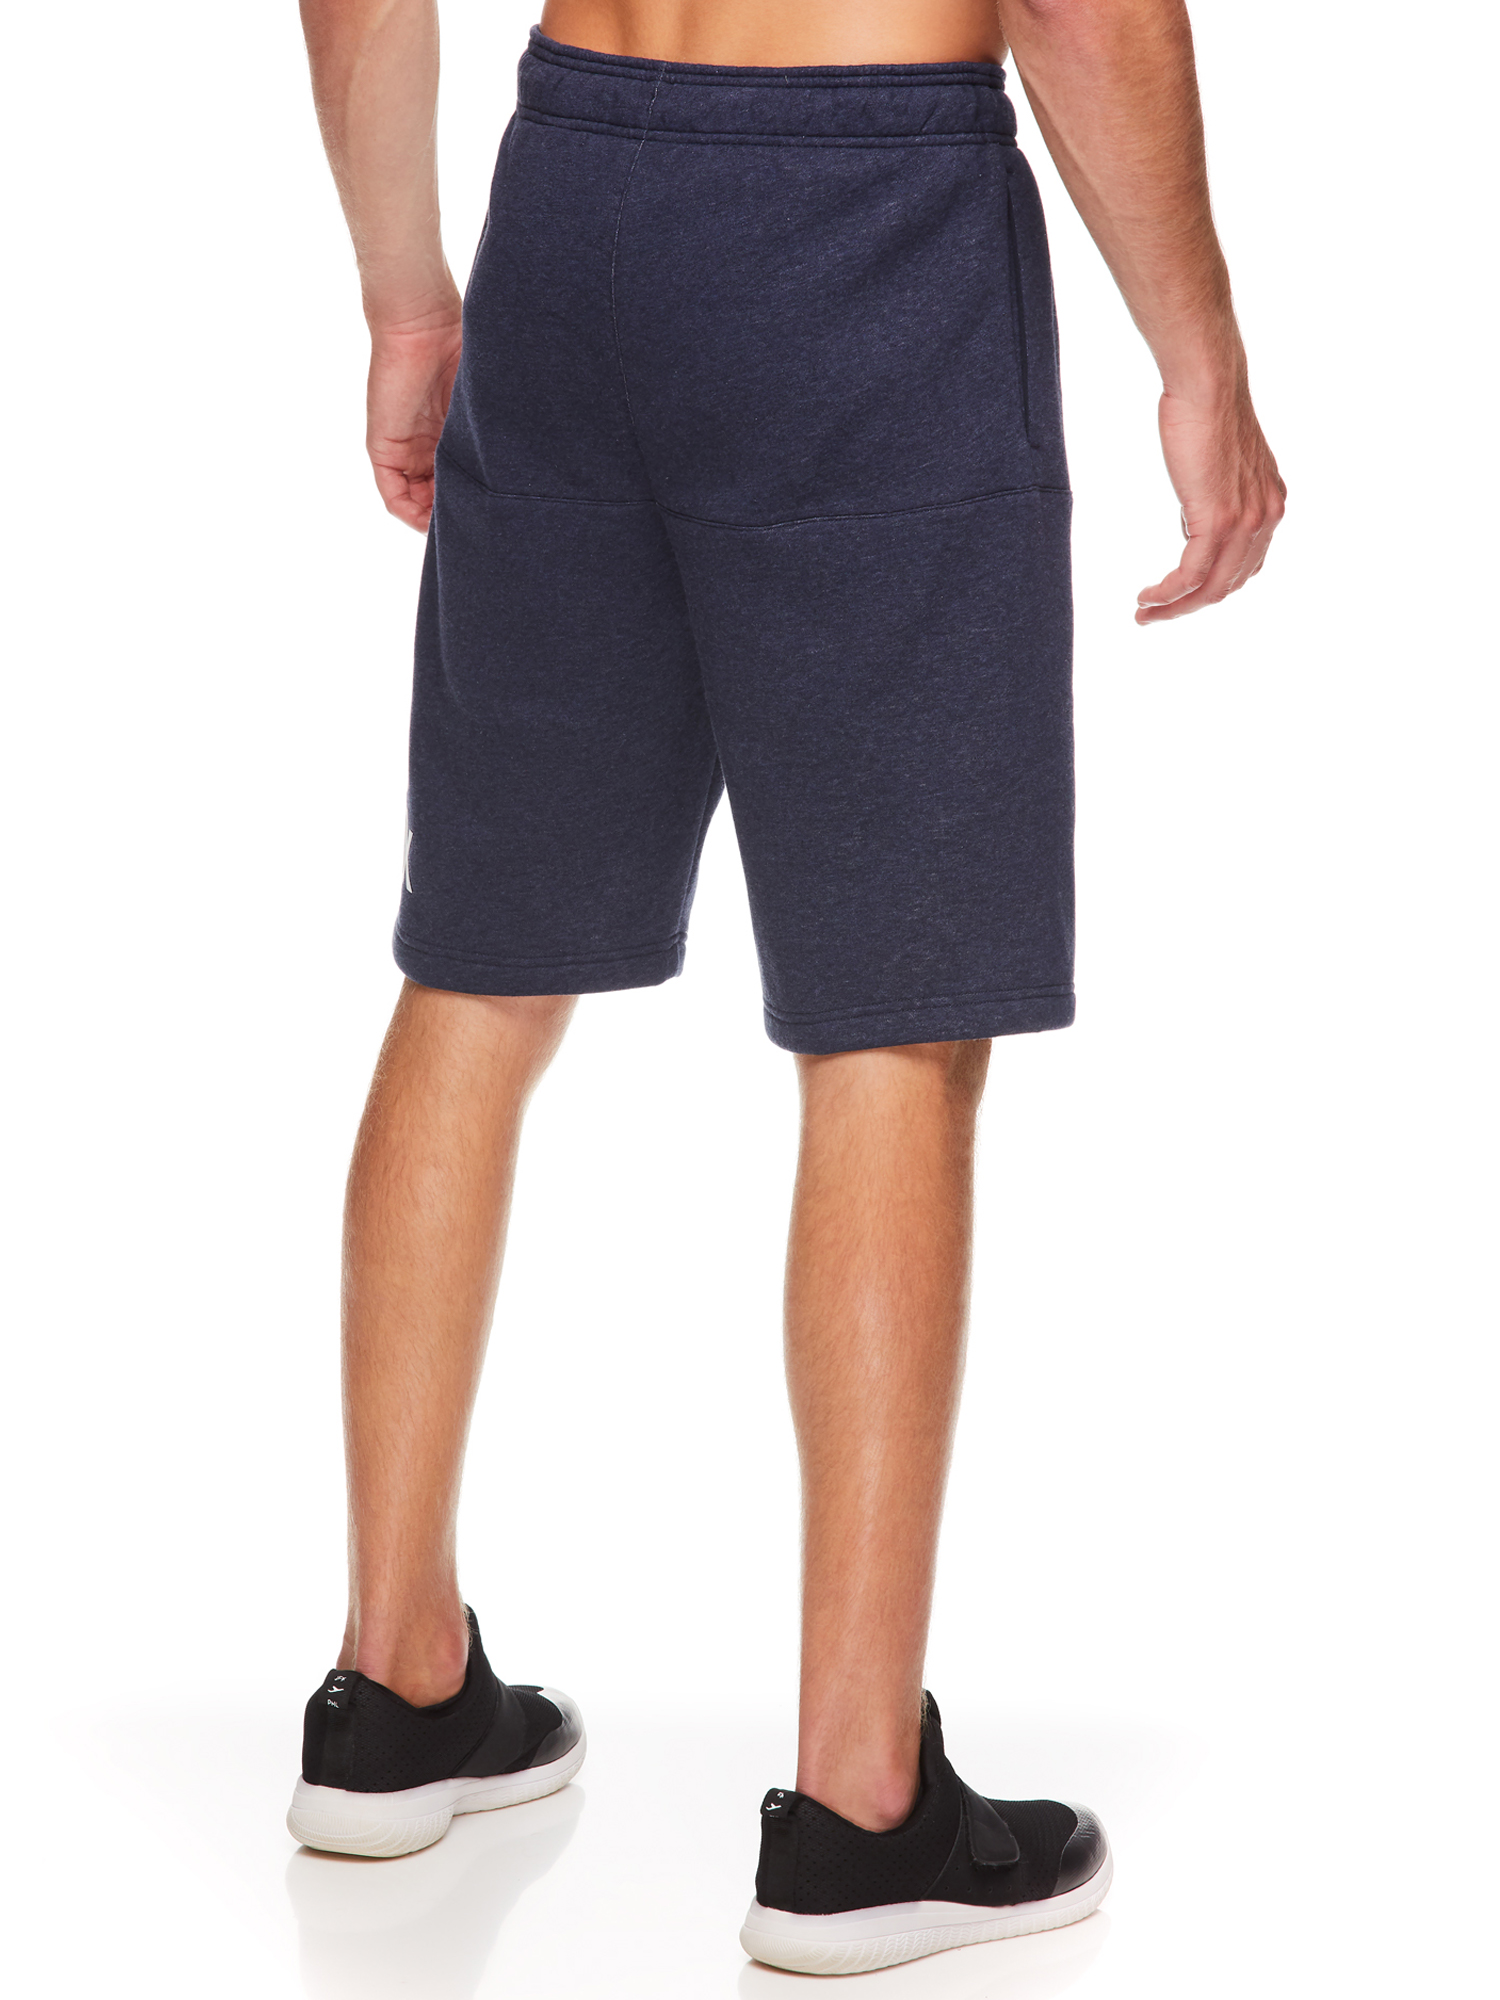 Reebok Men's Low Lift Fleece Shorts - image 4 of 4